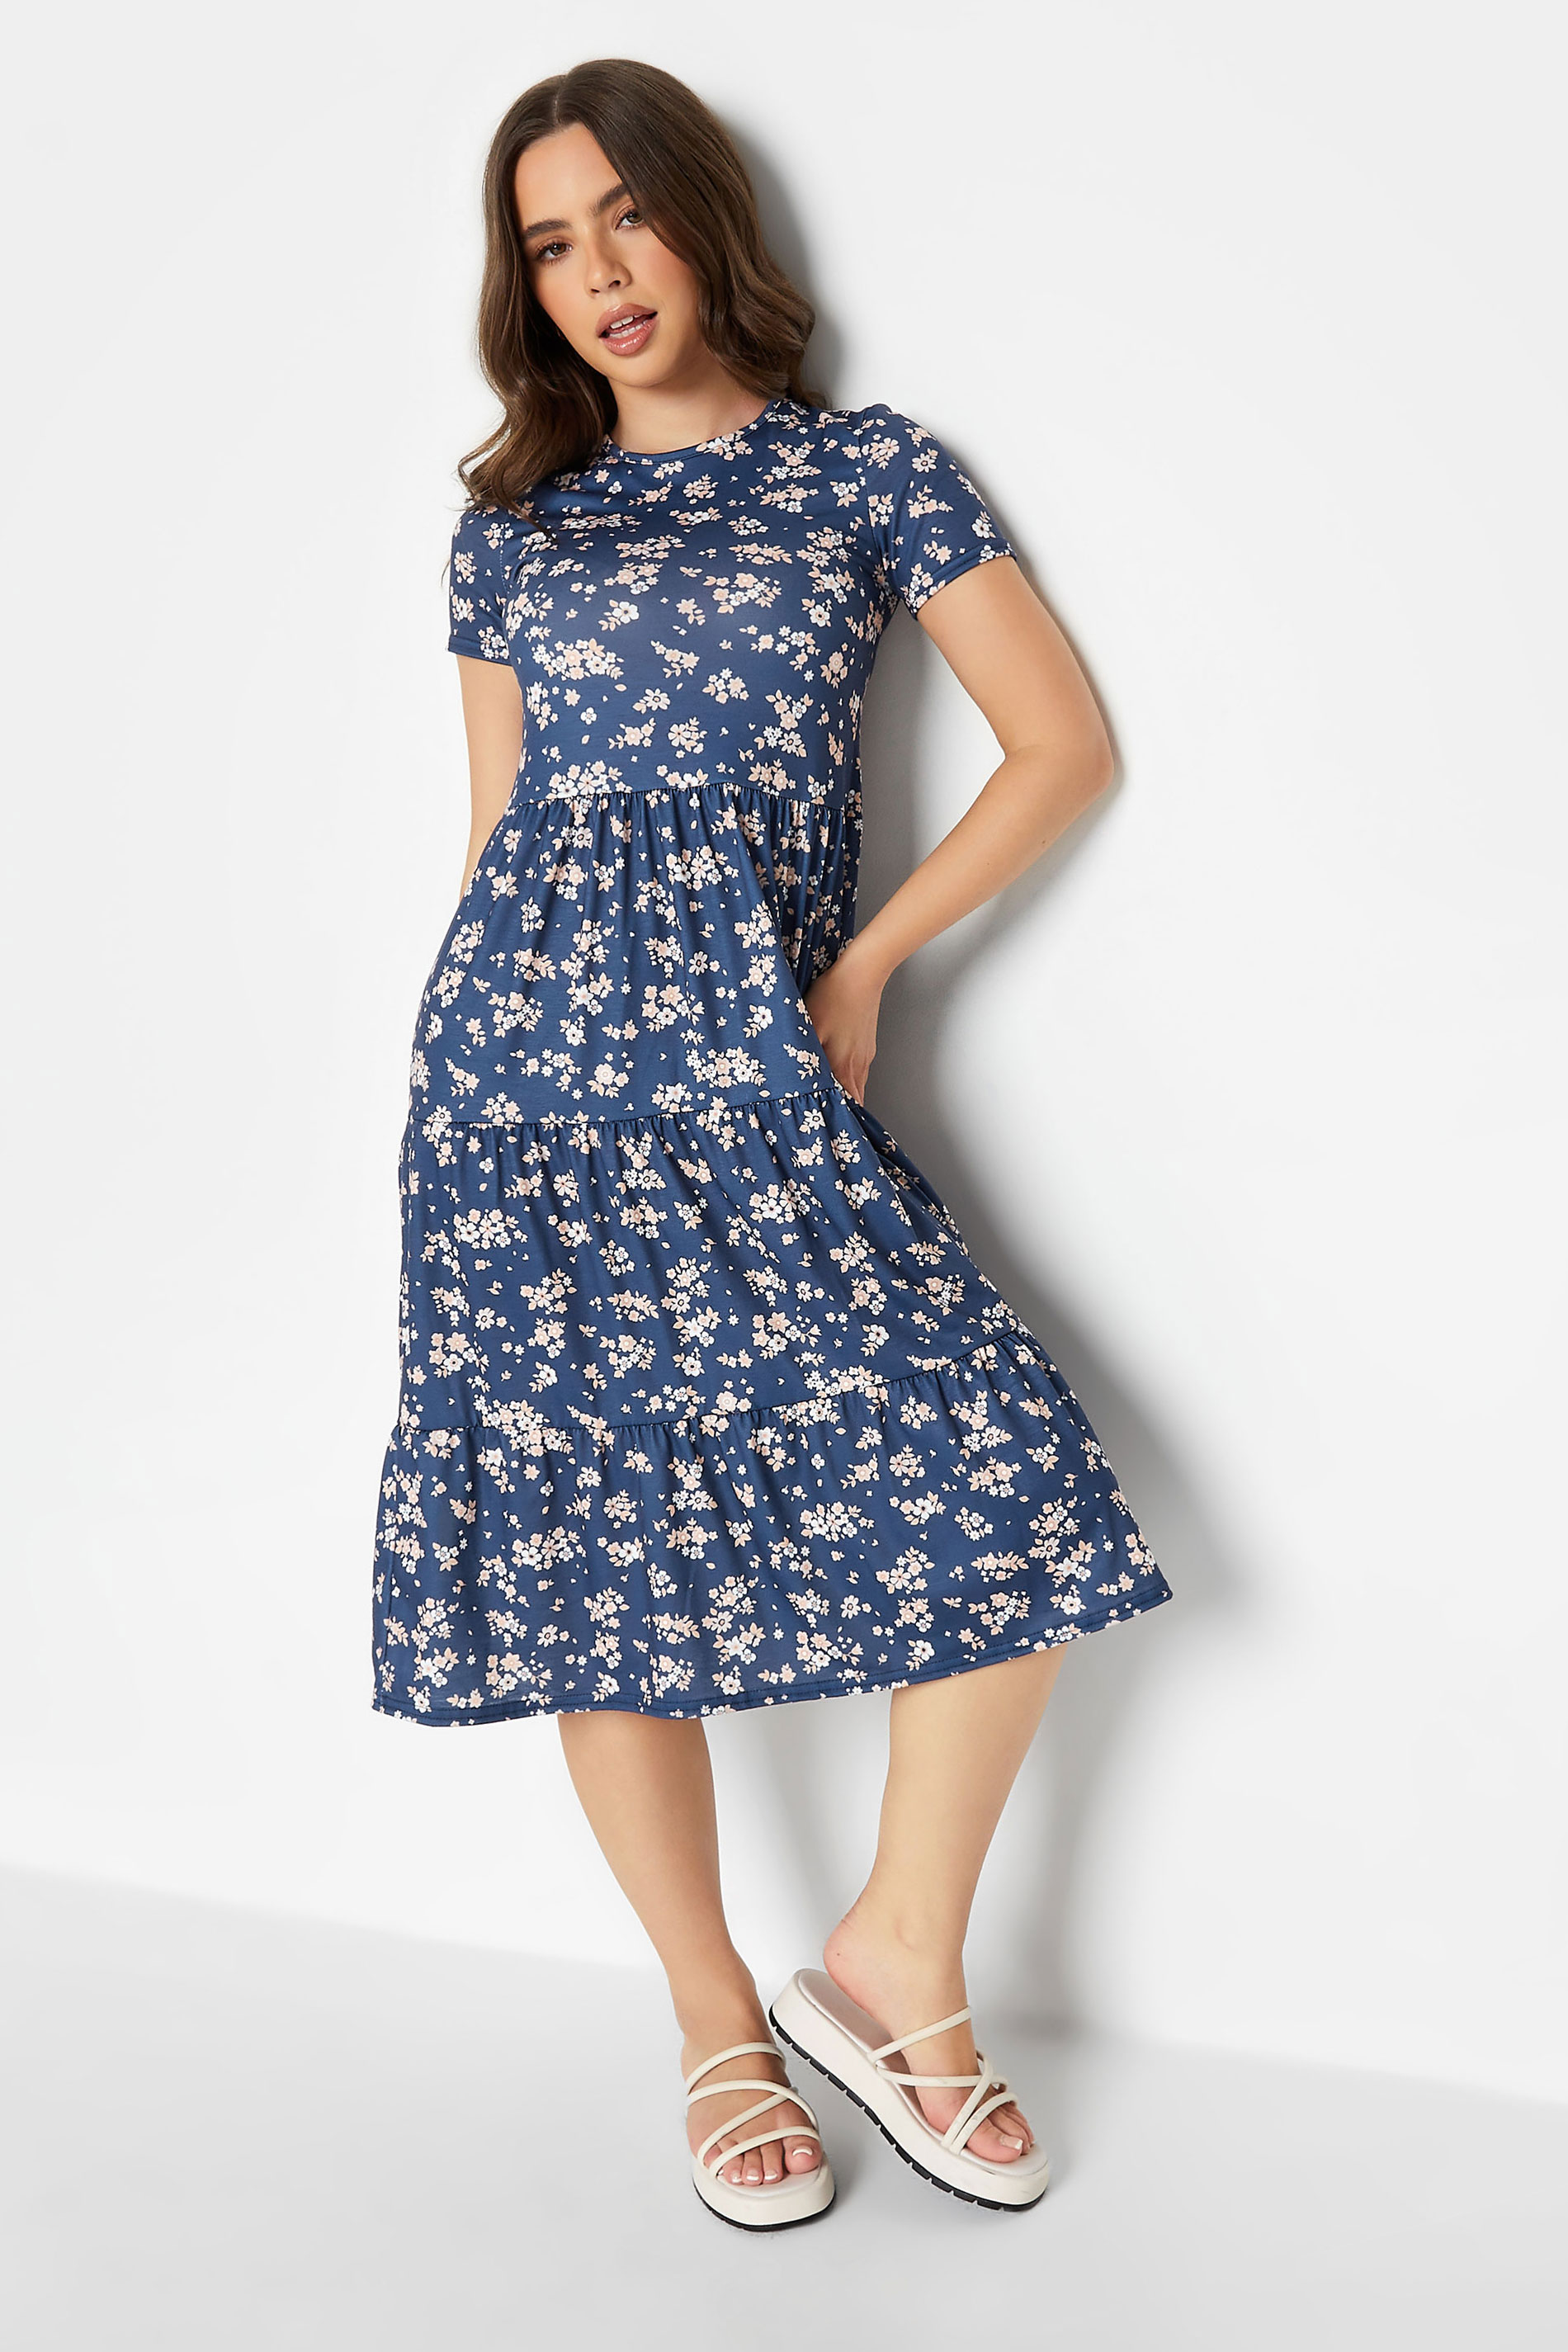 PixieGirl Blue Ditsy Floral Print Dress | PixieGirl